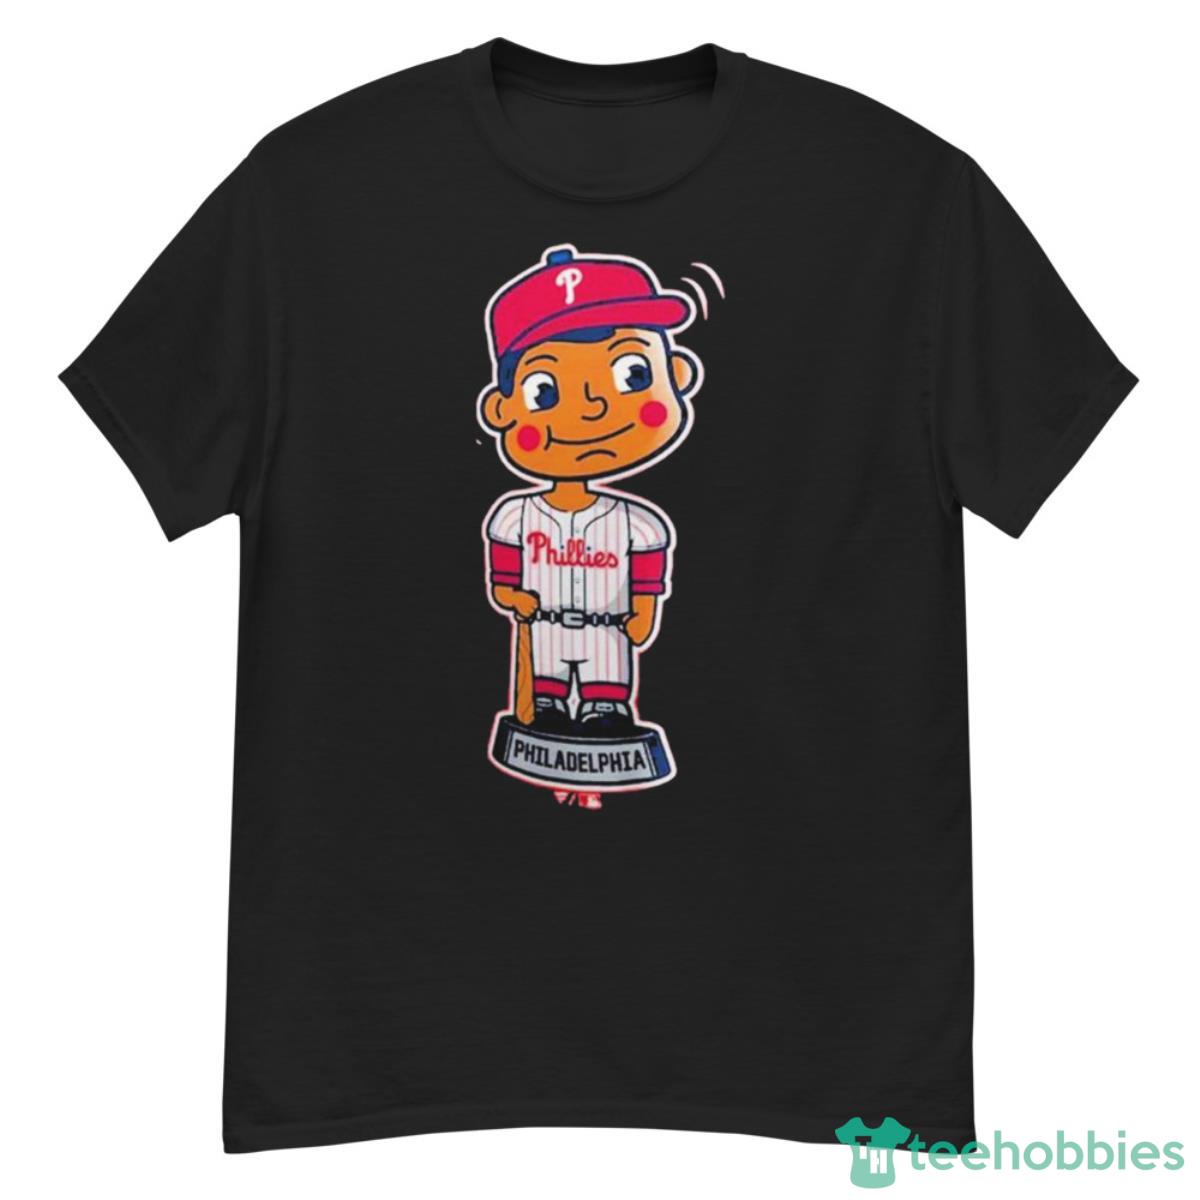 Philadelphia Phillies Fanatics Branded Pop Fly Shirt - G500 Men’s Classic T-Shirt